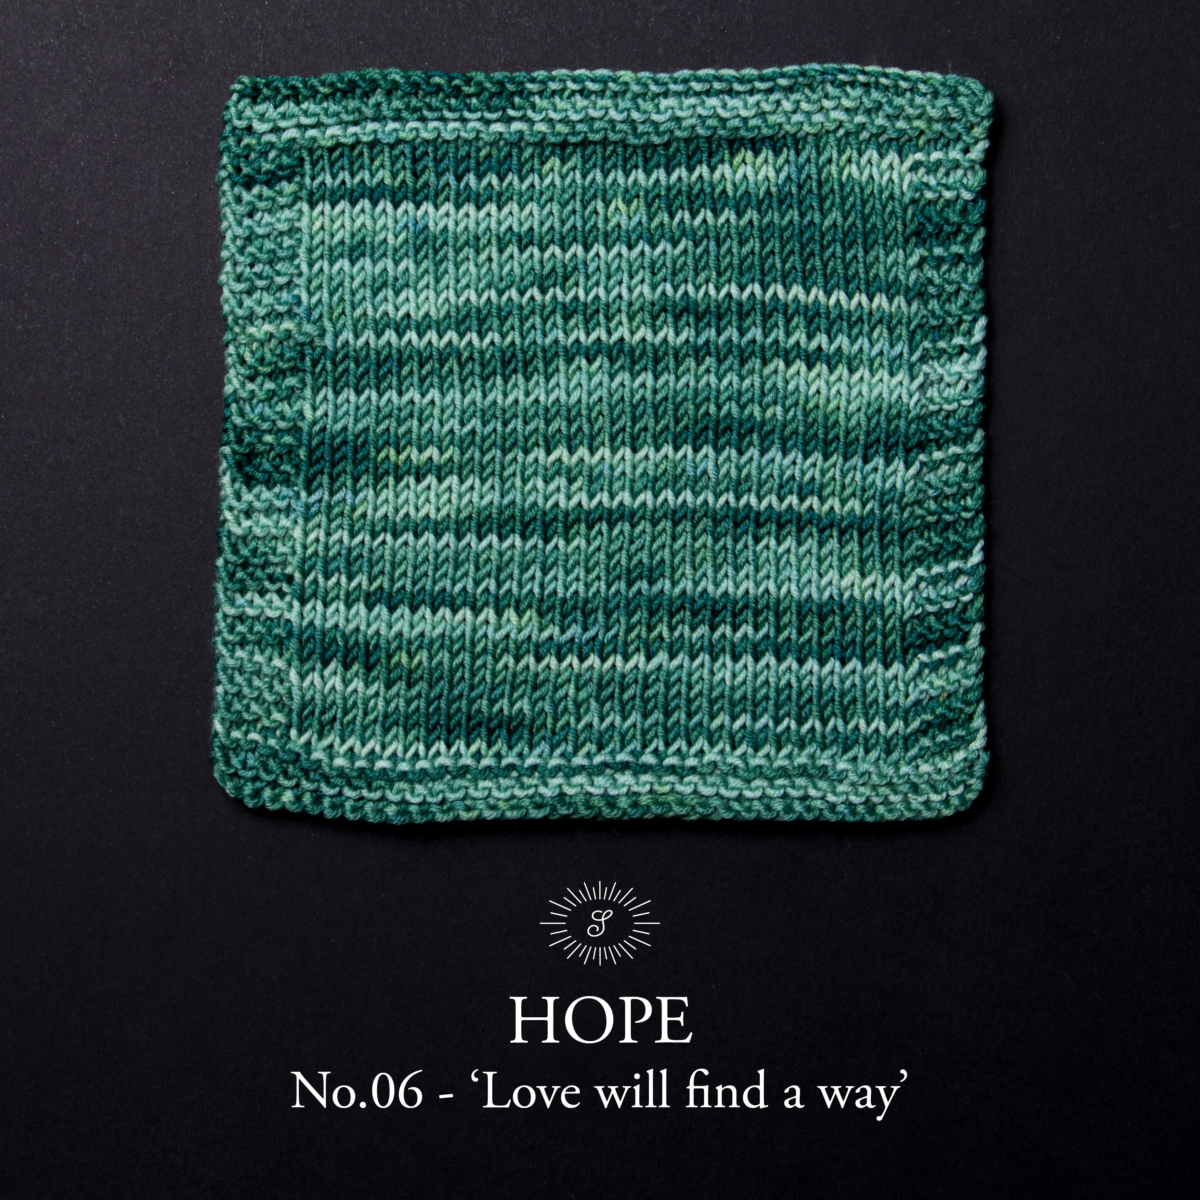 Hope s 06